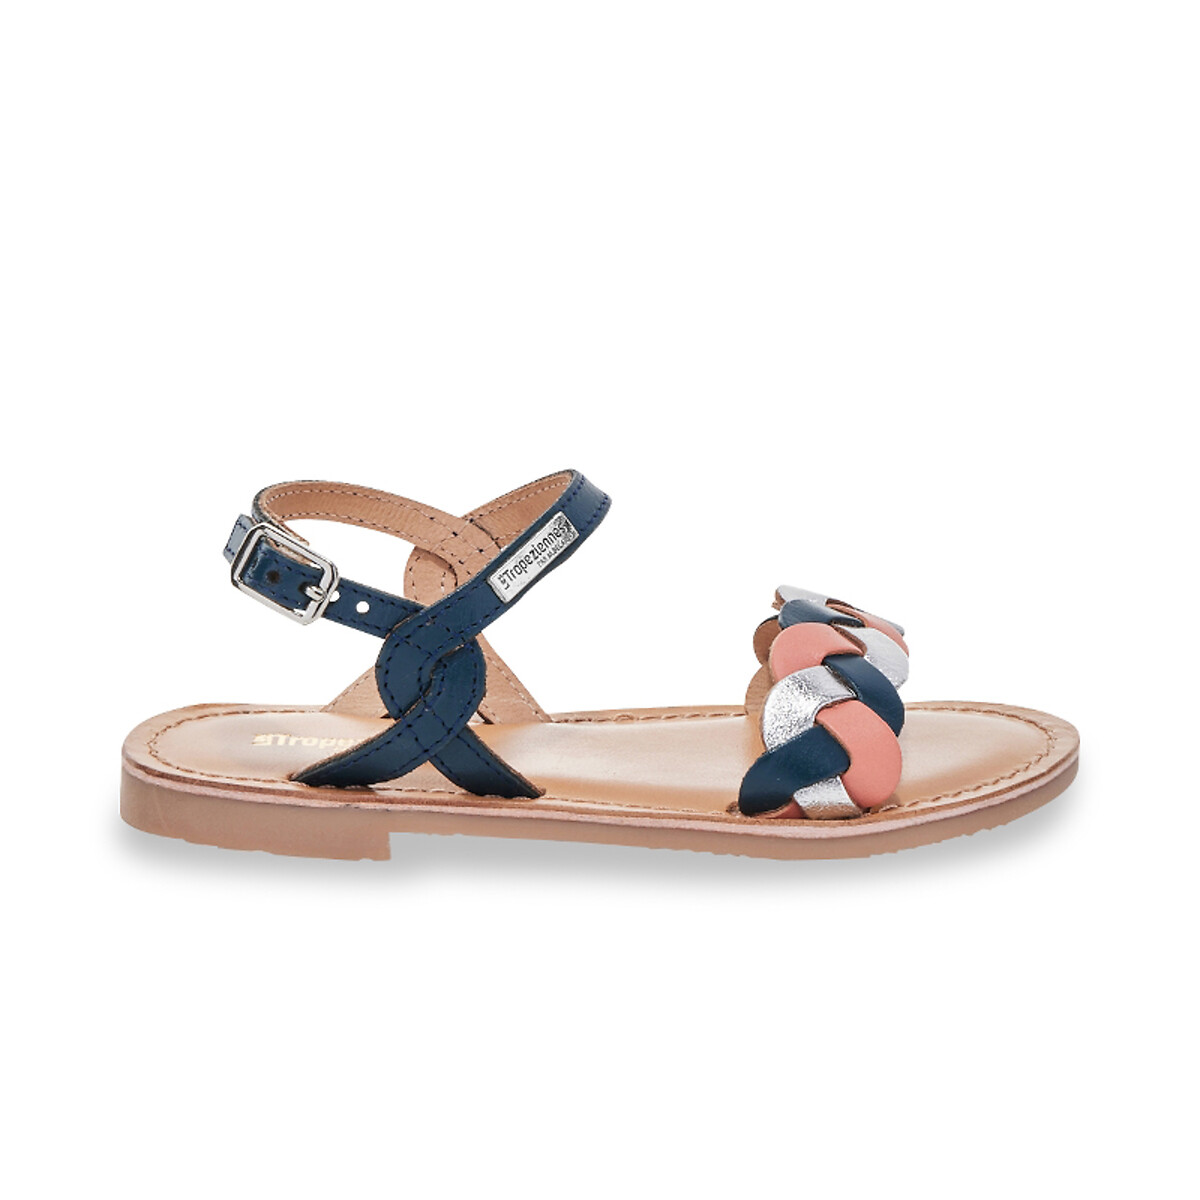 Cute Blue Leather Sandals - Tassel Sandals - Navy Flat Sandals - Lulus